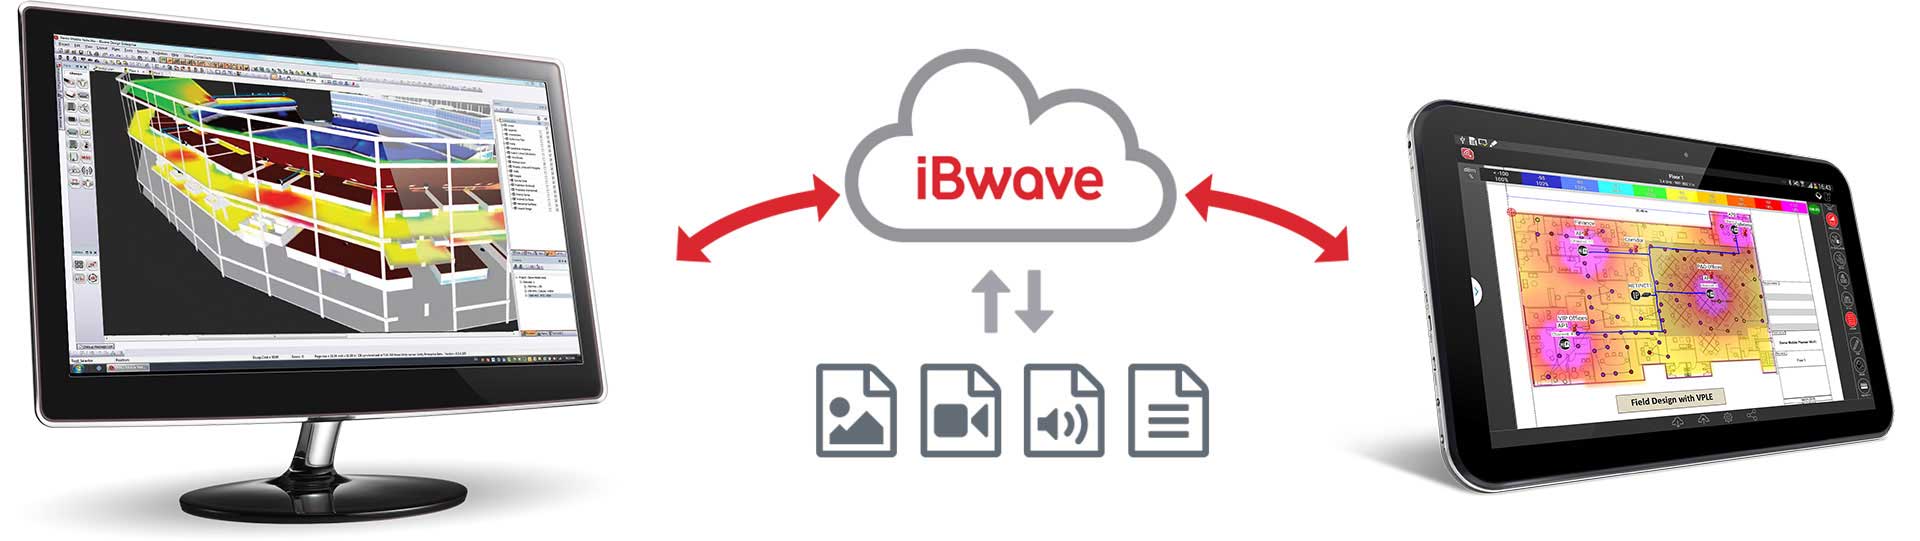 iBwave Wi-Fi and iBwave Wi-Fi Mobile via the Cloud